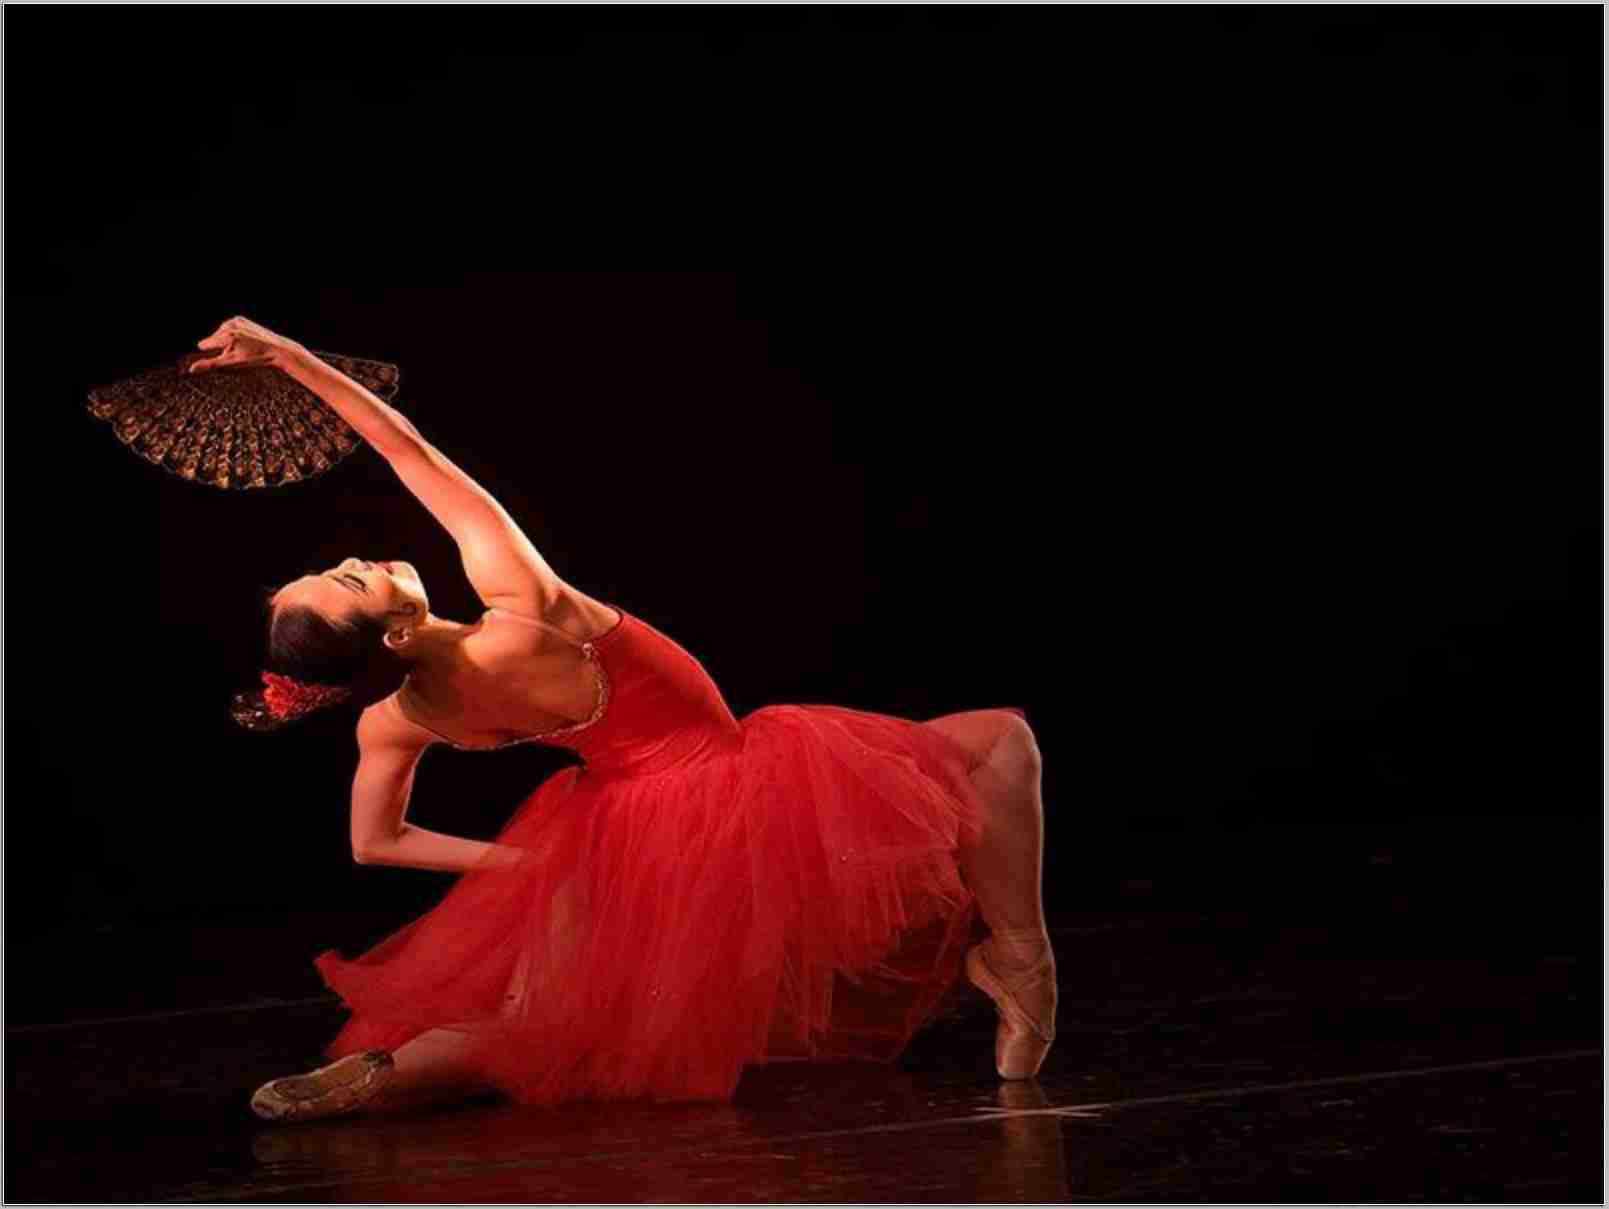 Top 16 fondos de pantalla de bailarina hermosa colección - PicsBroker.com